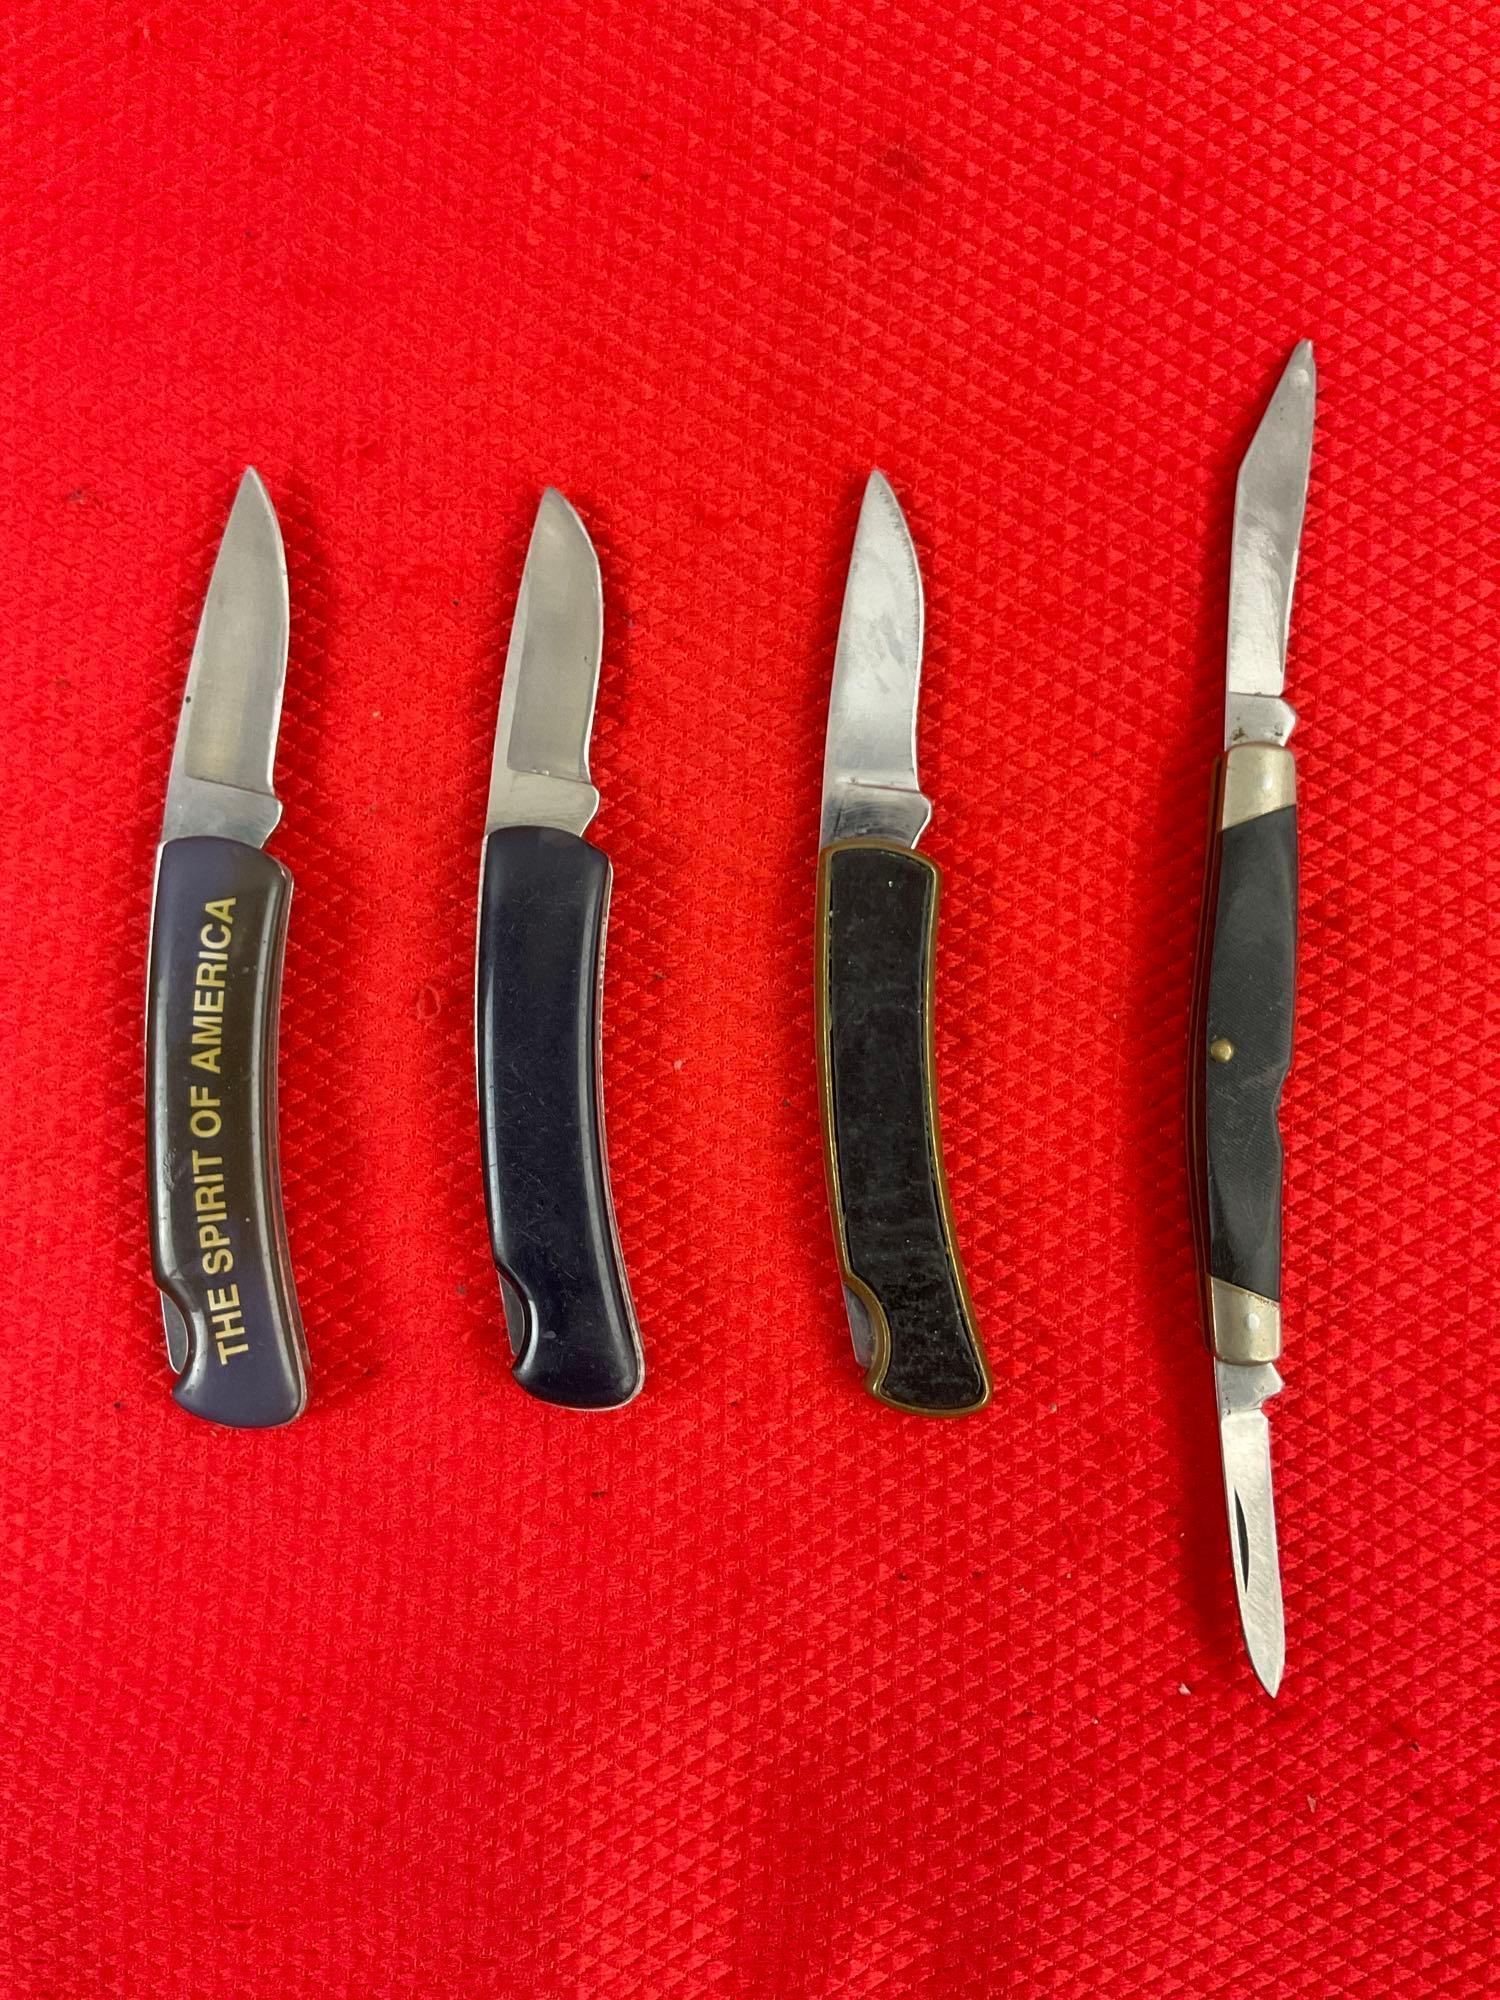 4 pcs Vintage Buck Steel Folding Pocket Knives Models 525, 529 & 309. 1 Ltd Ed Signed. See pics.